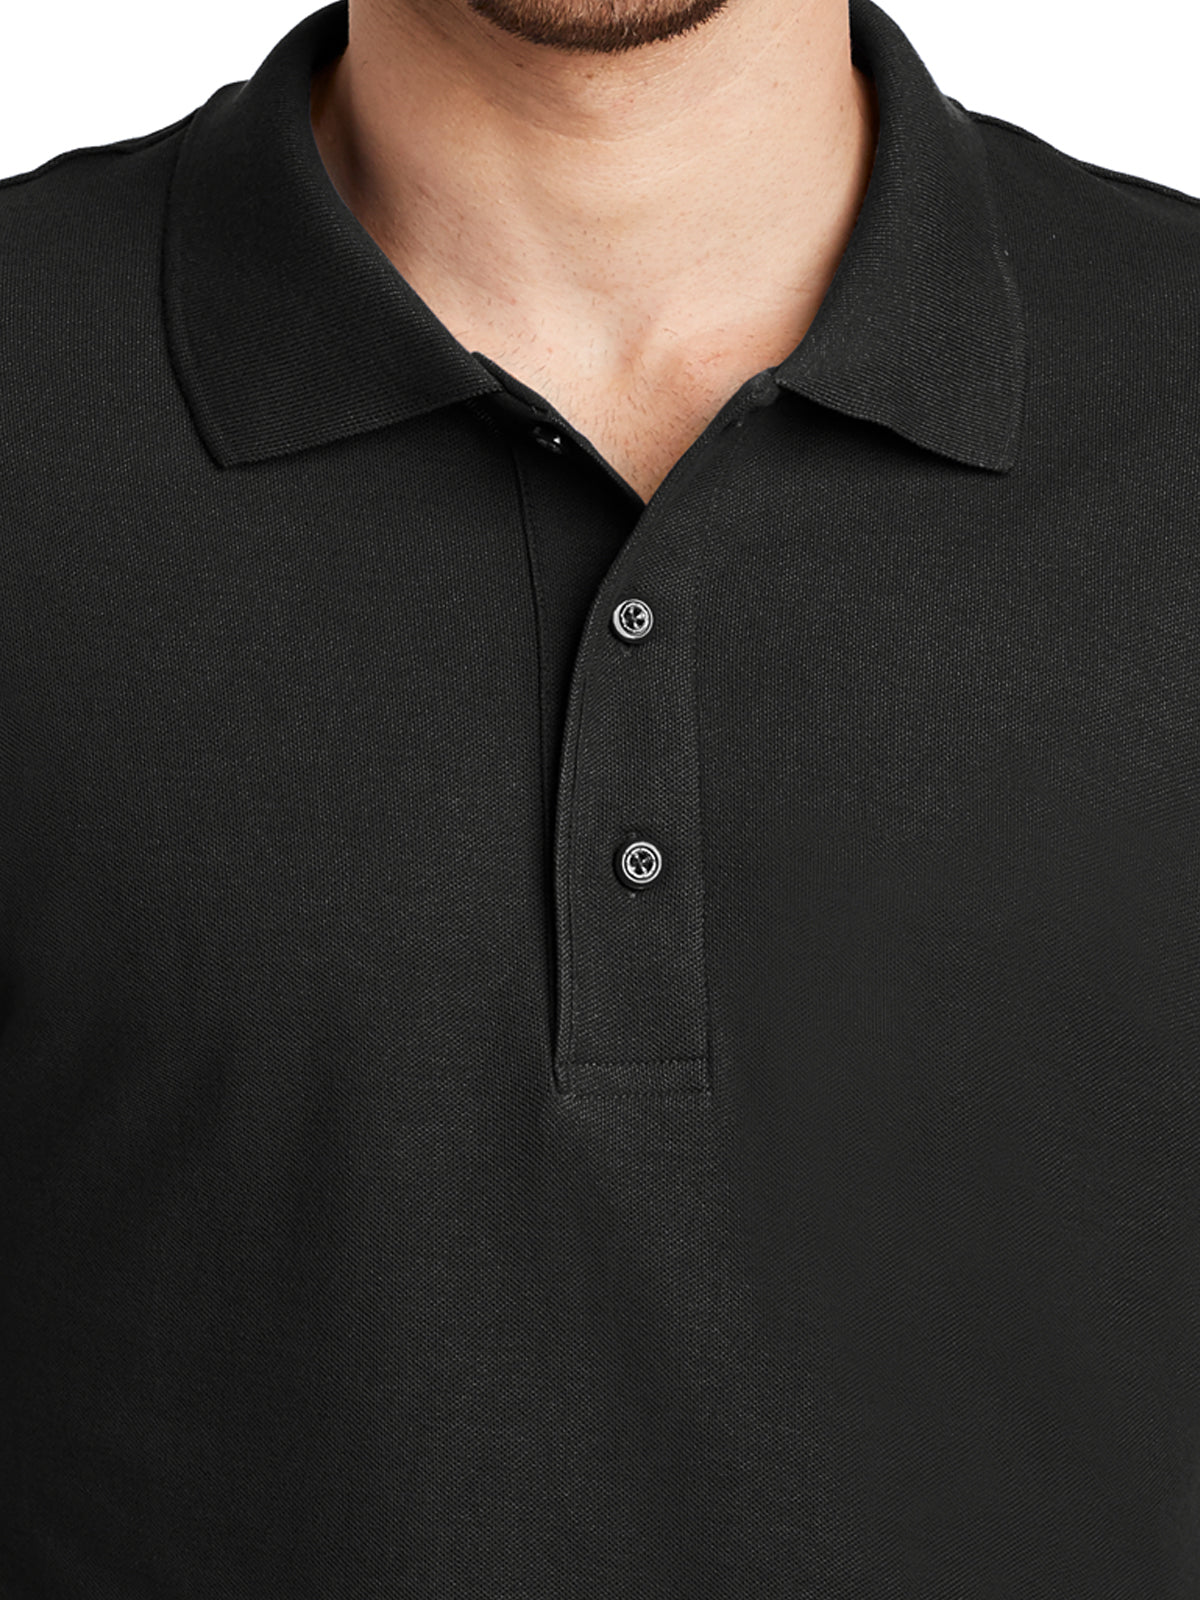 Men's Tall Silk Touch Polo Shirt - TLK500 - Black